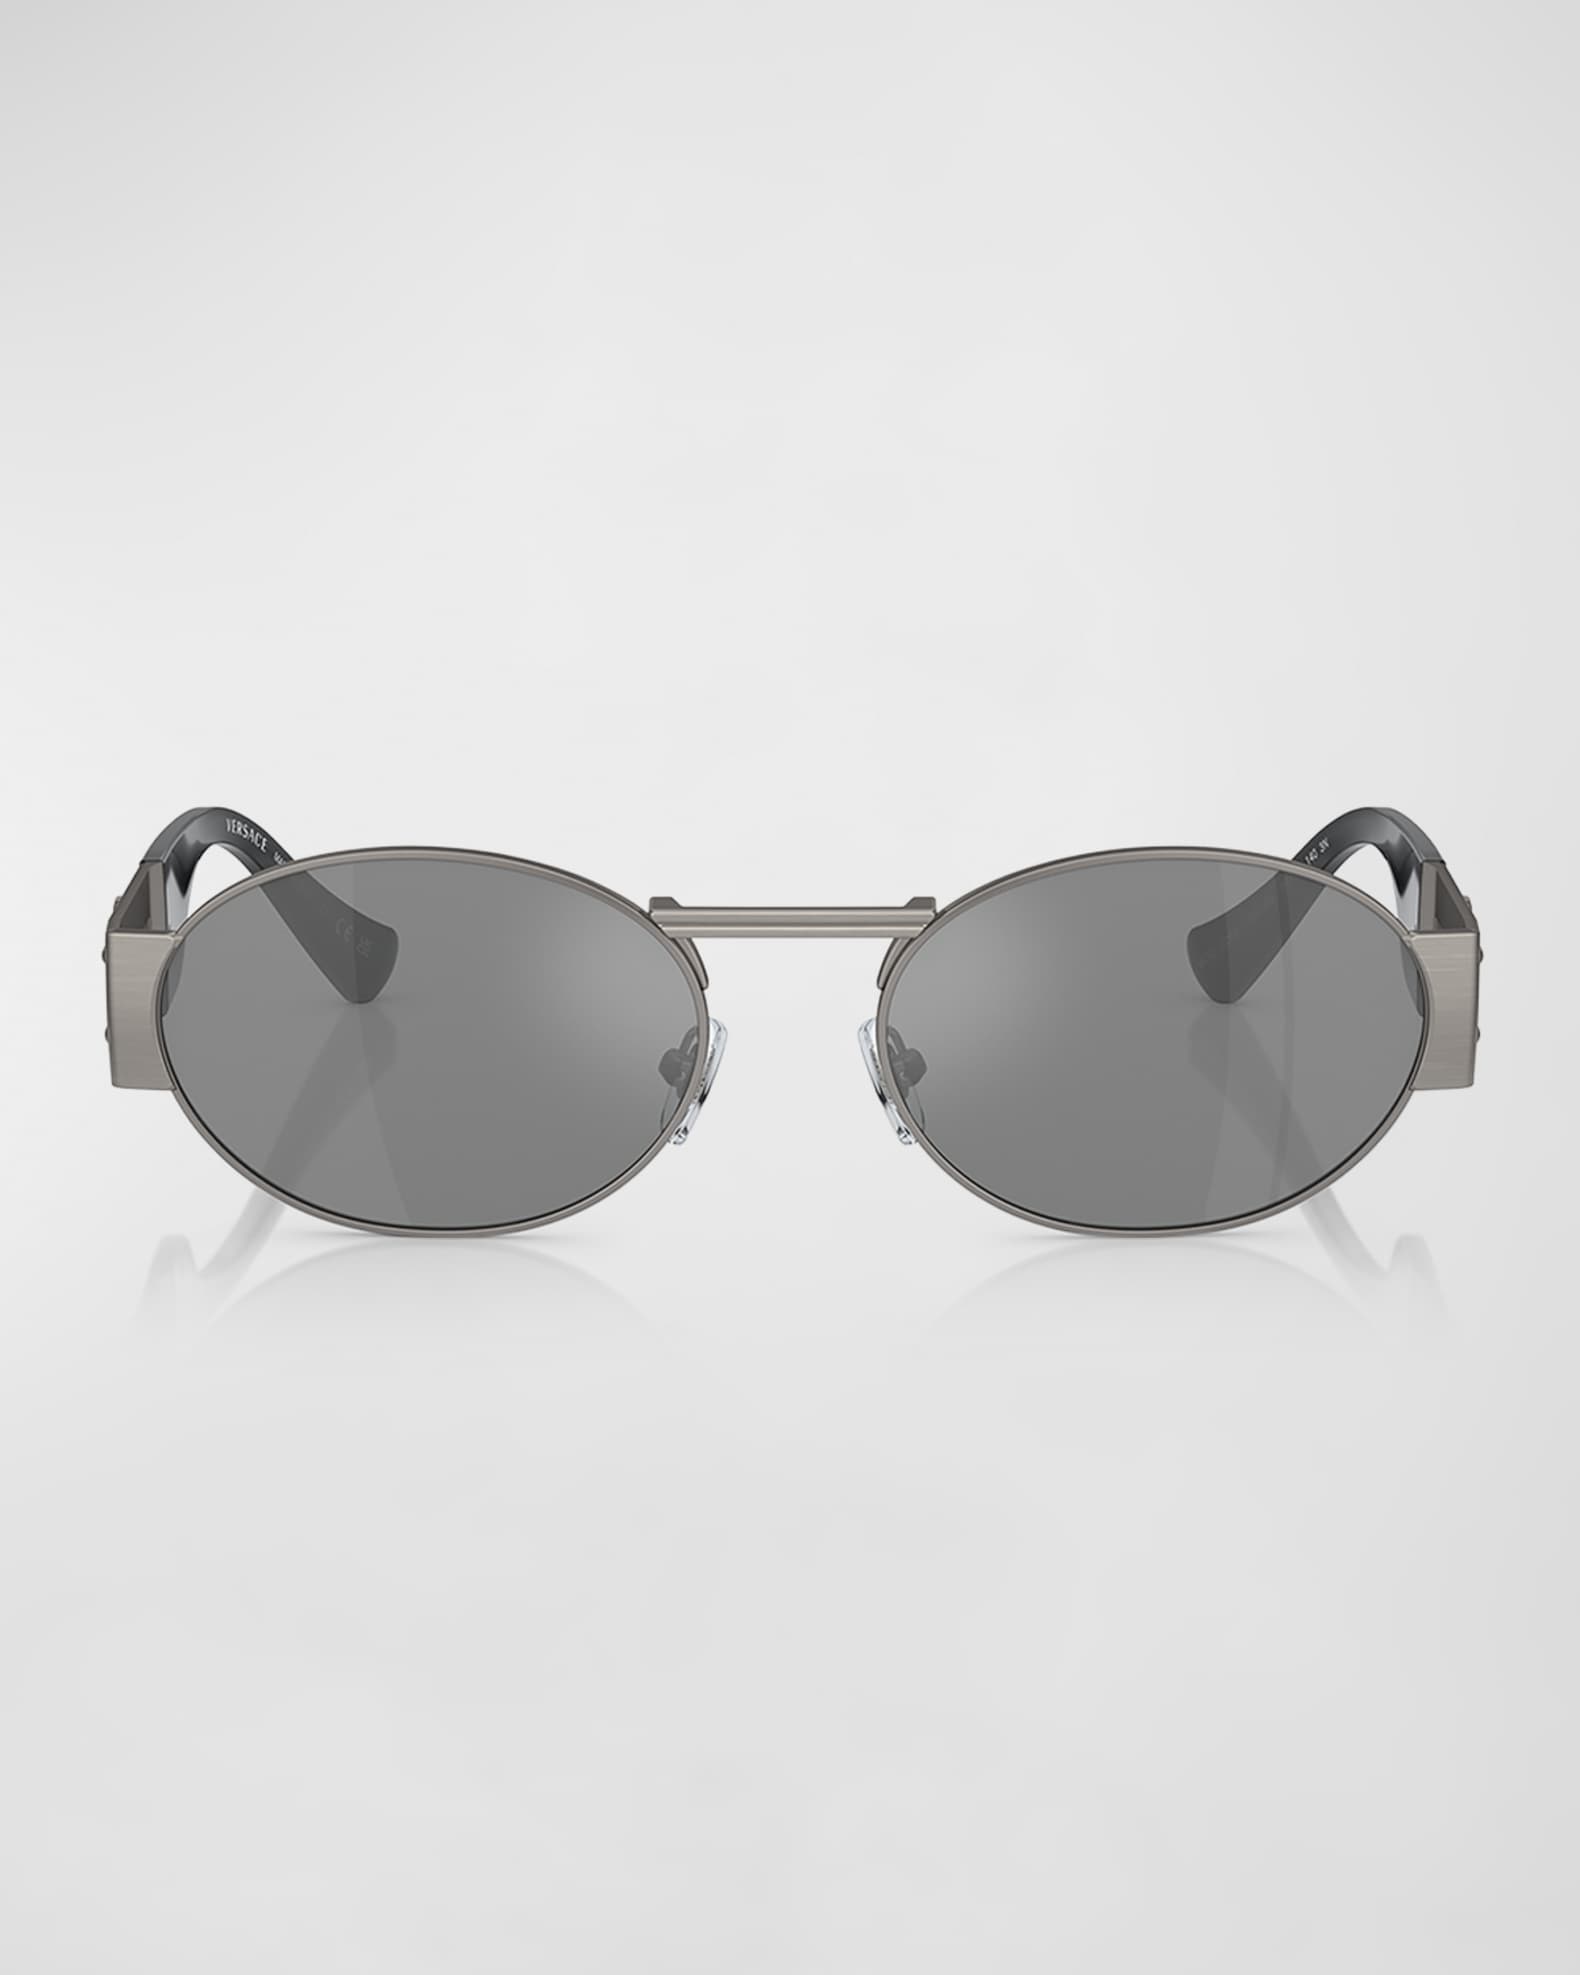 Designer Polarized Rimless Sunglasses Mens For Men Versage Oval Metal Frame  With Basilisk Head Trendy Multicolor Goggles Wholesale From  Fashionsdesigner, $4.01